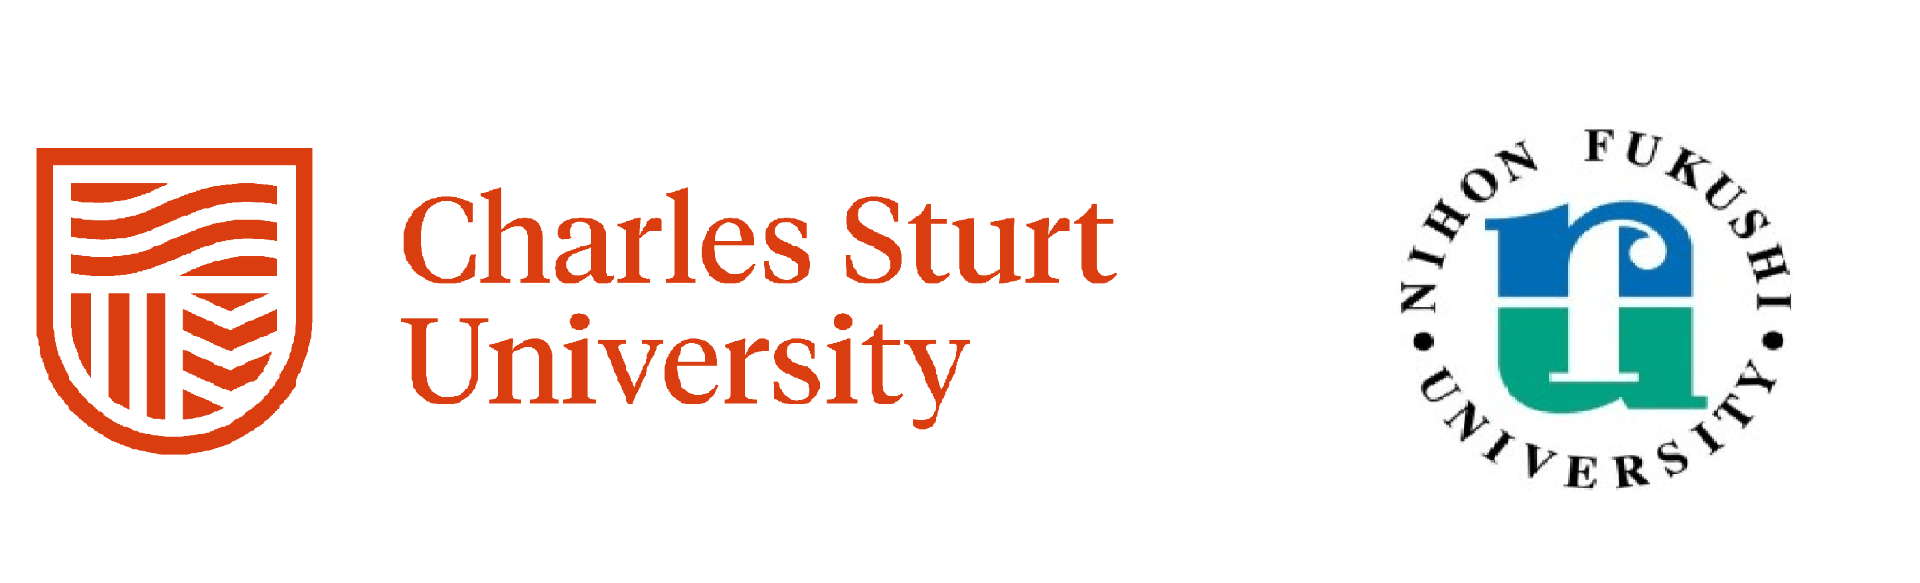 Photos shows two university logos